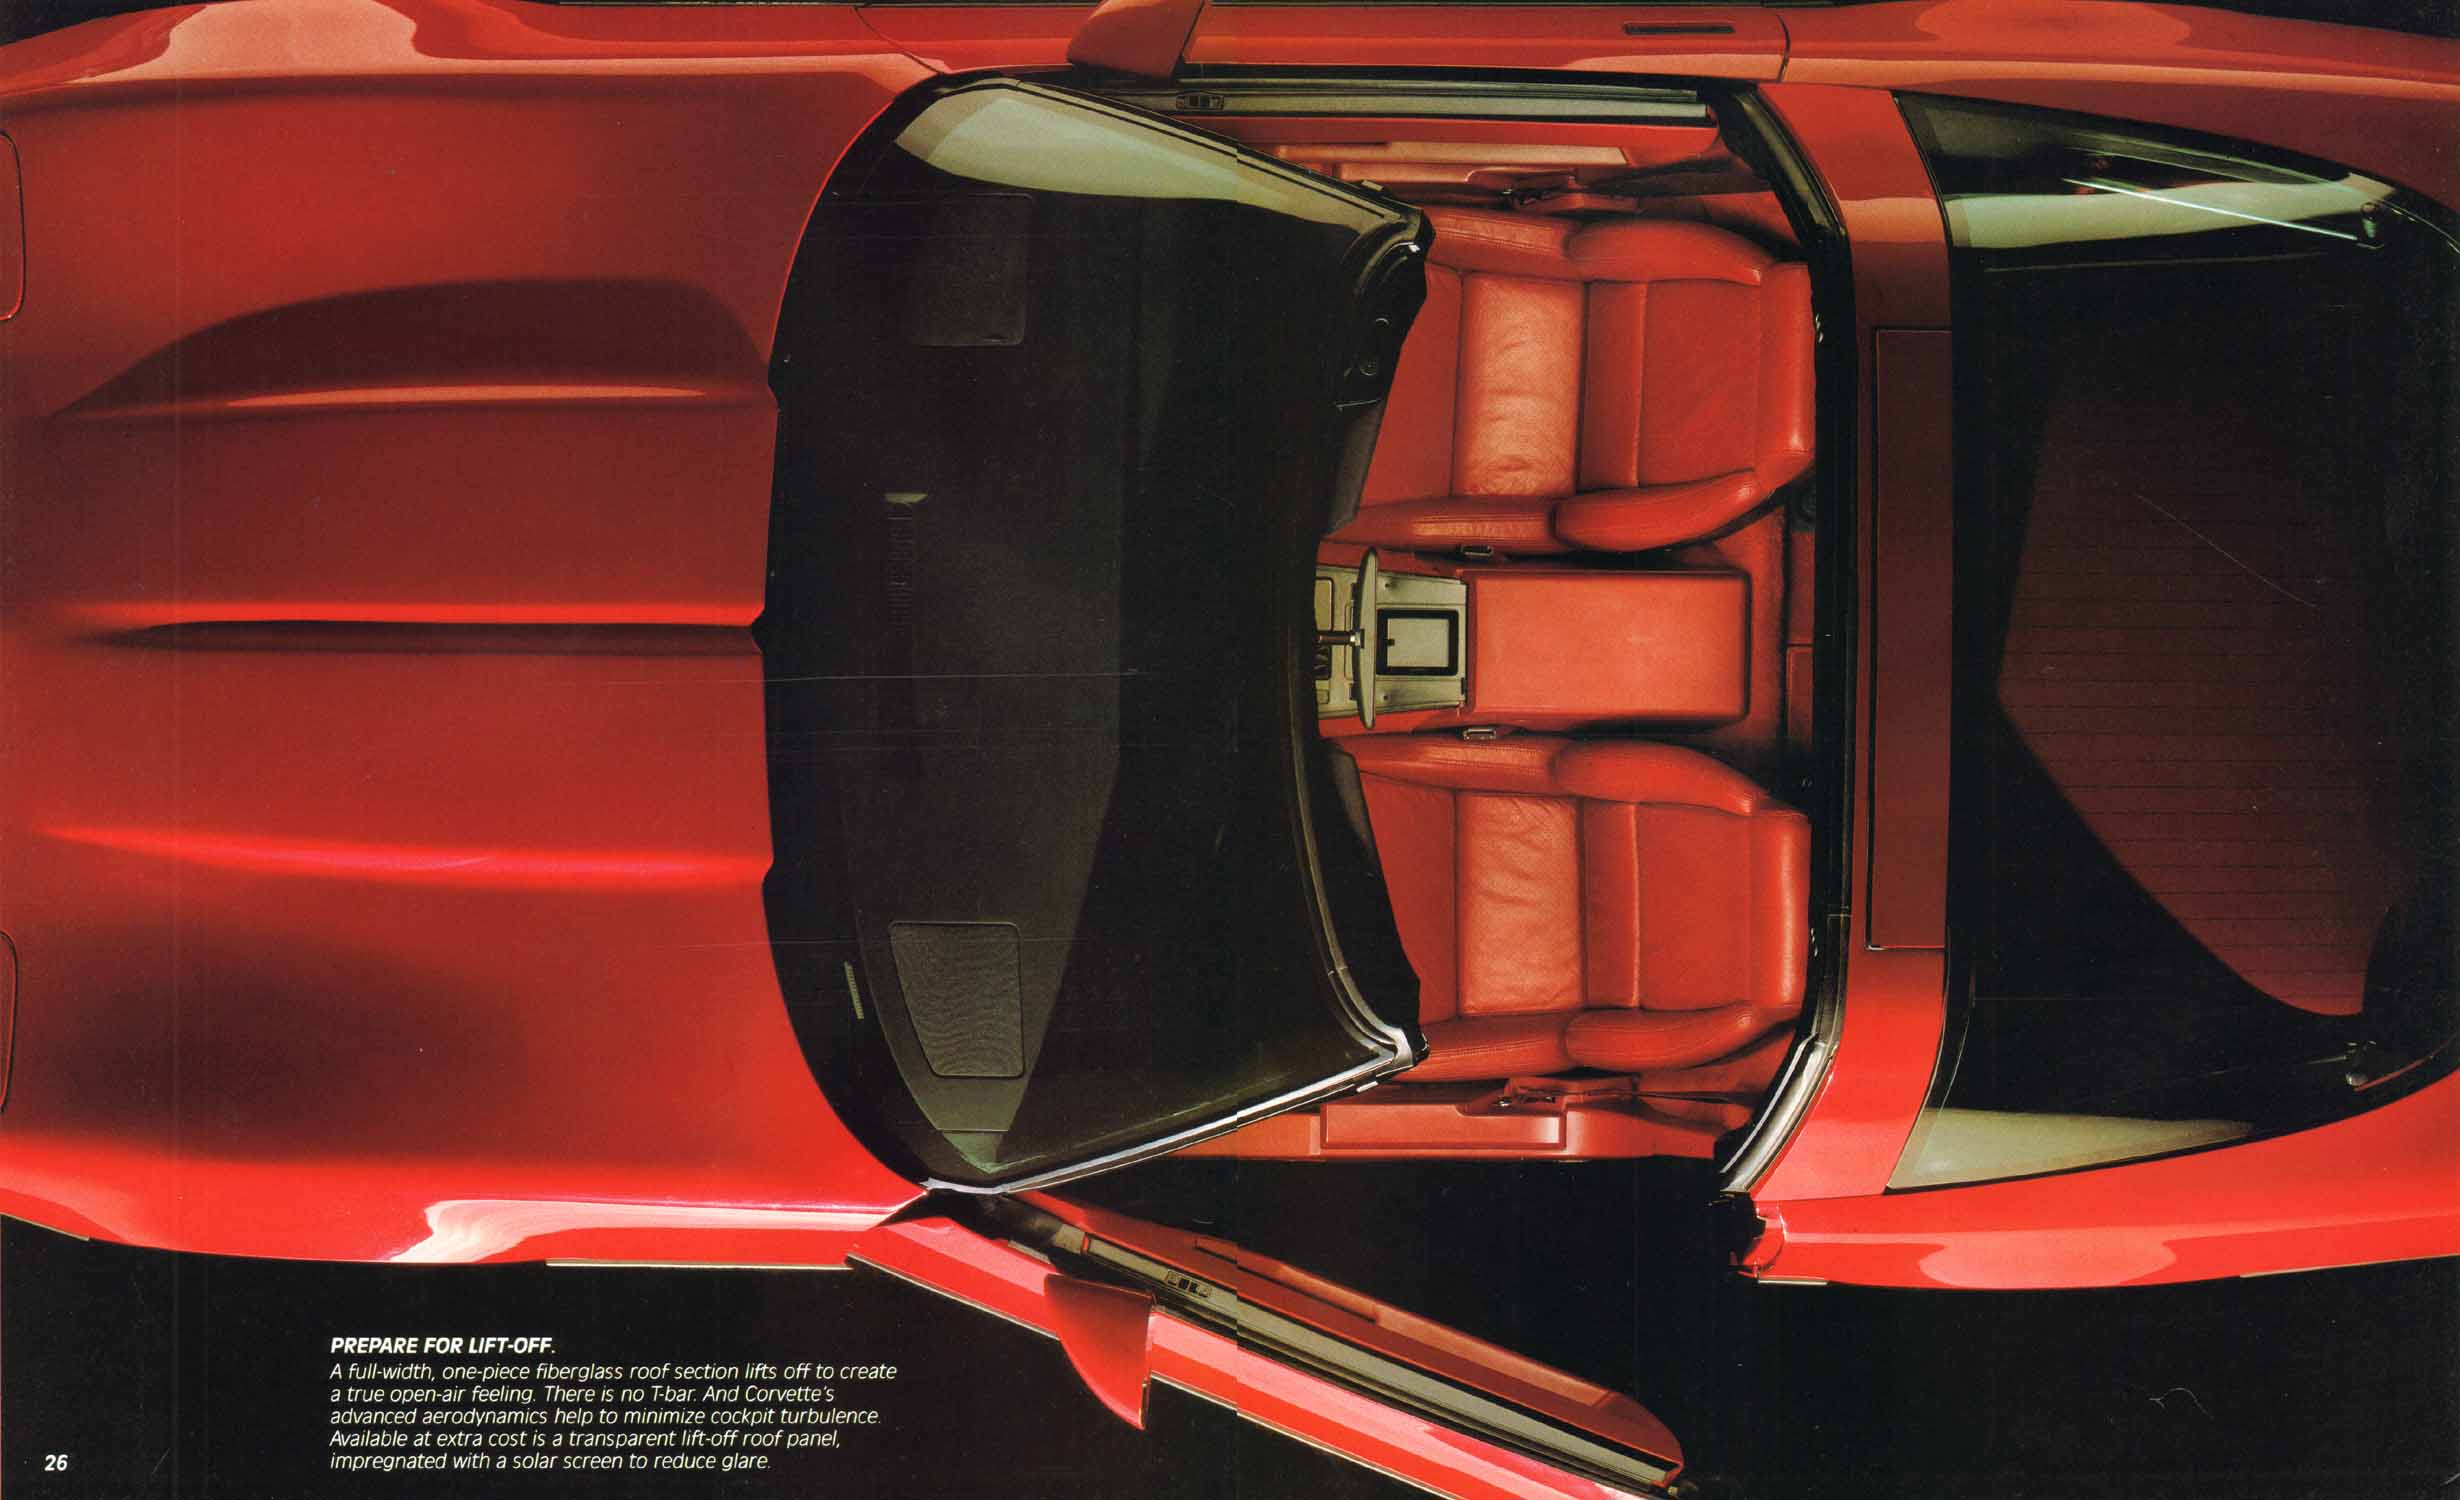 1984_Chevrolet_Corvette_Prestige_Brochure-26-27